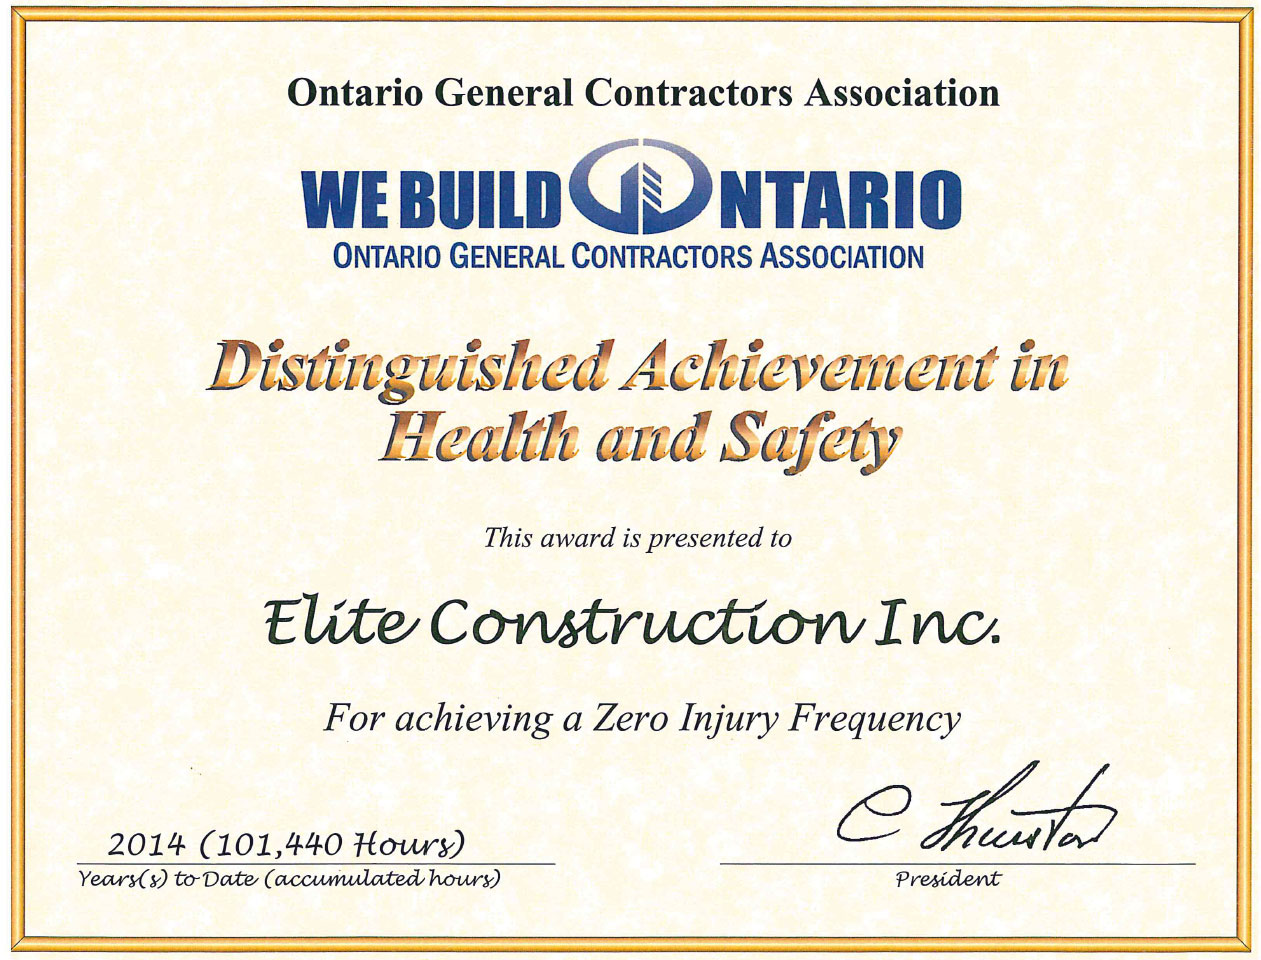 OGCA 2014 Safety Achievement Award